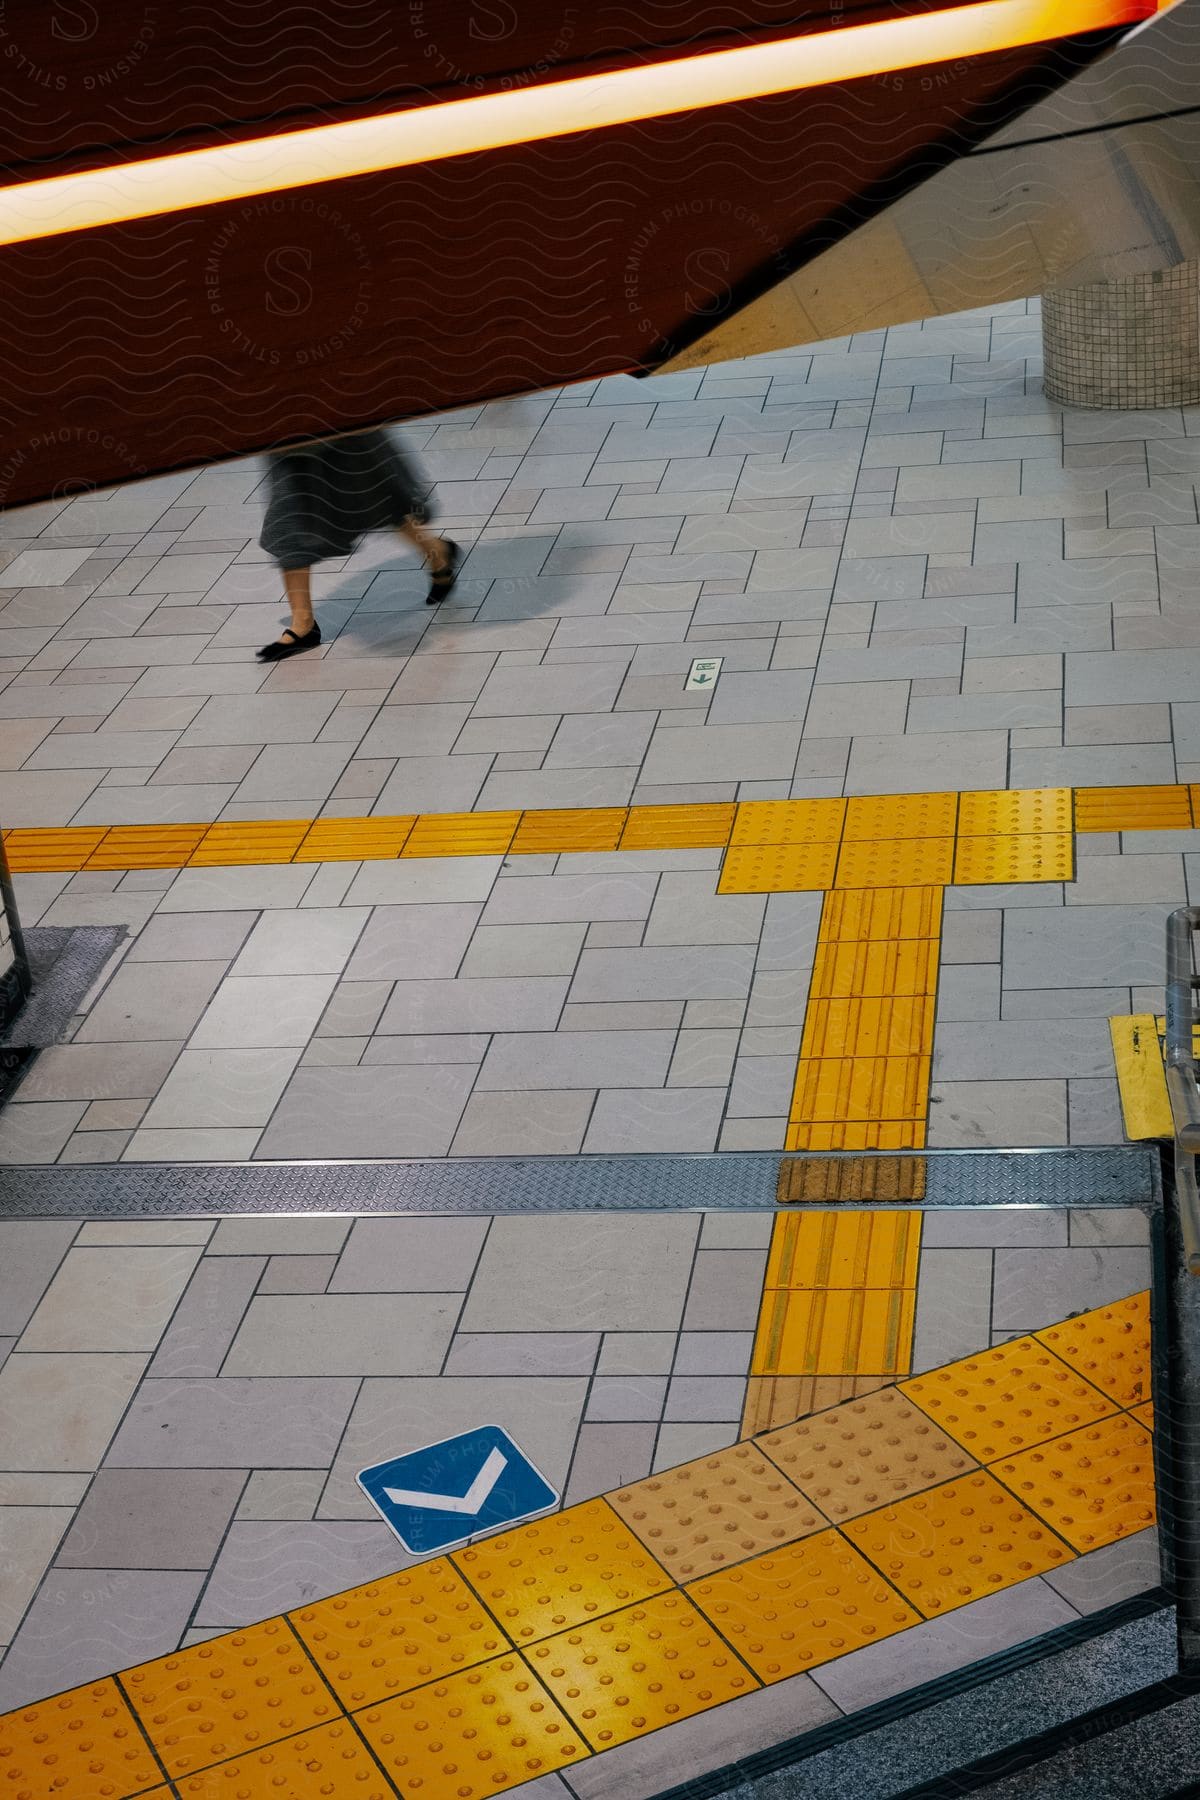 A woman walks on a train station platform with high heels